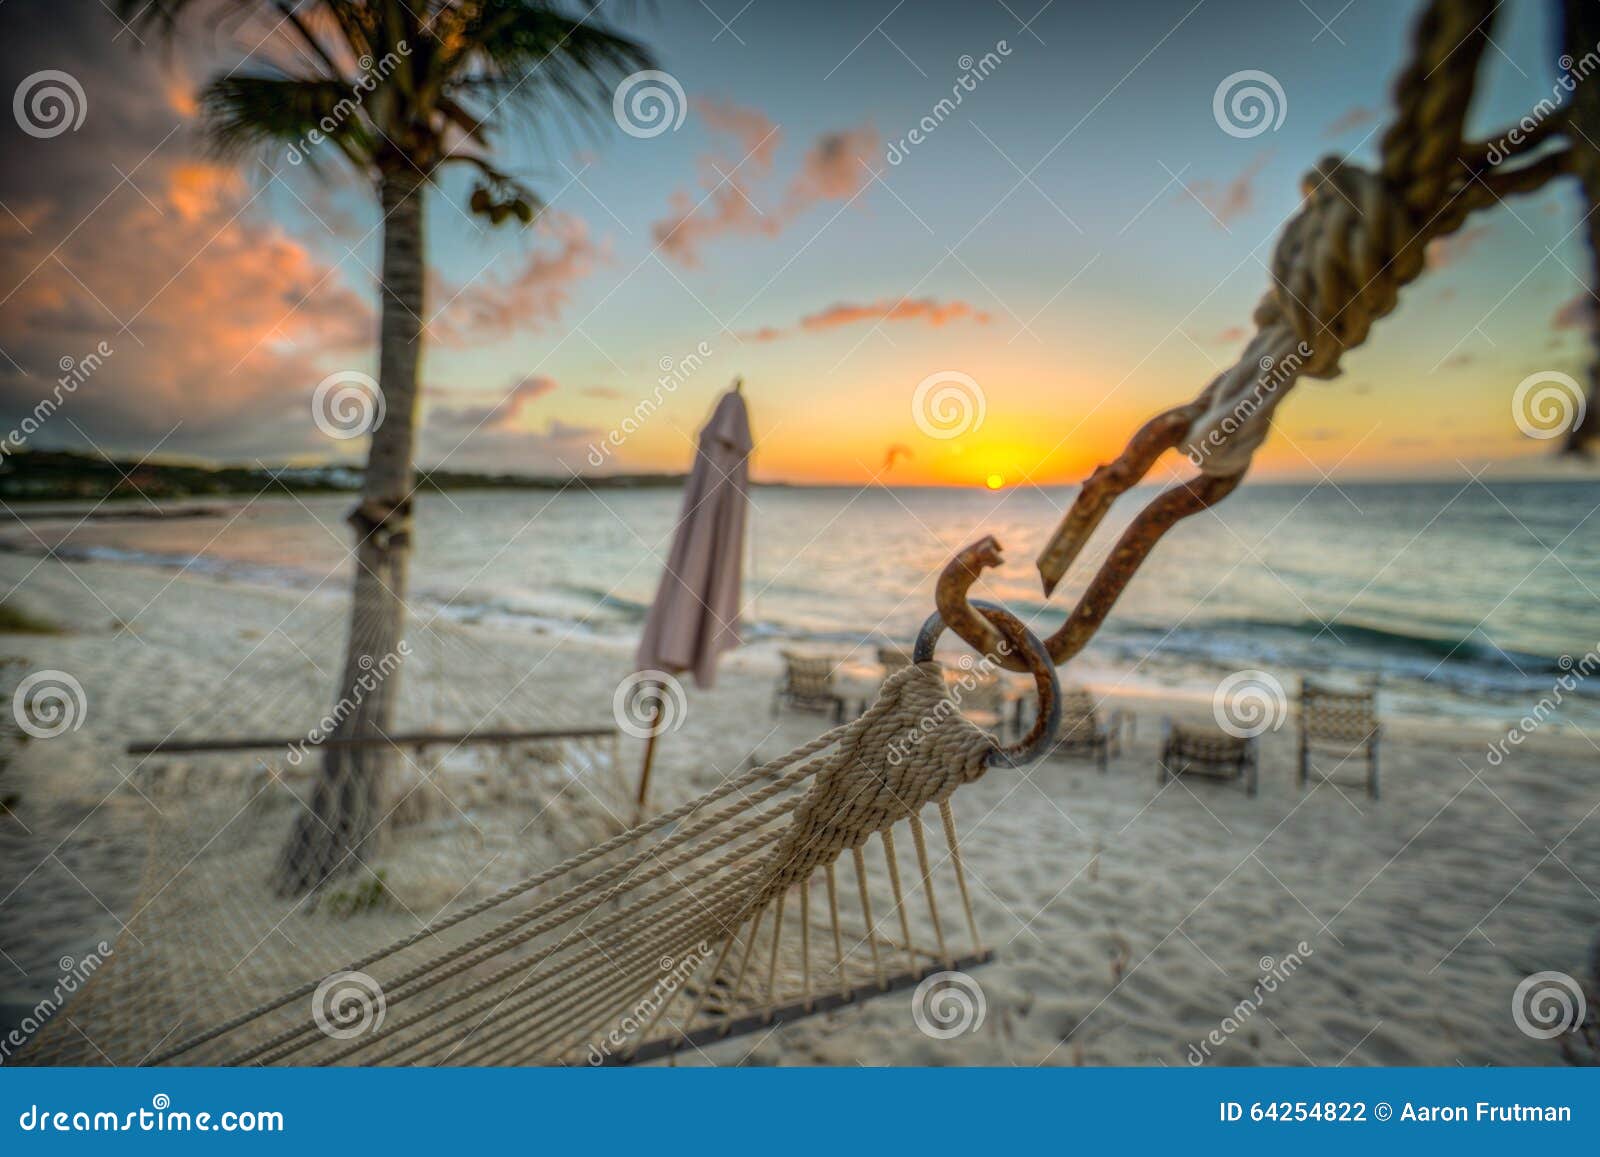 beach hammock at sunset on turks and caicos